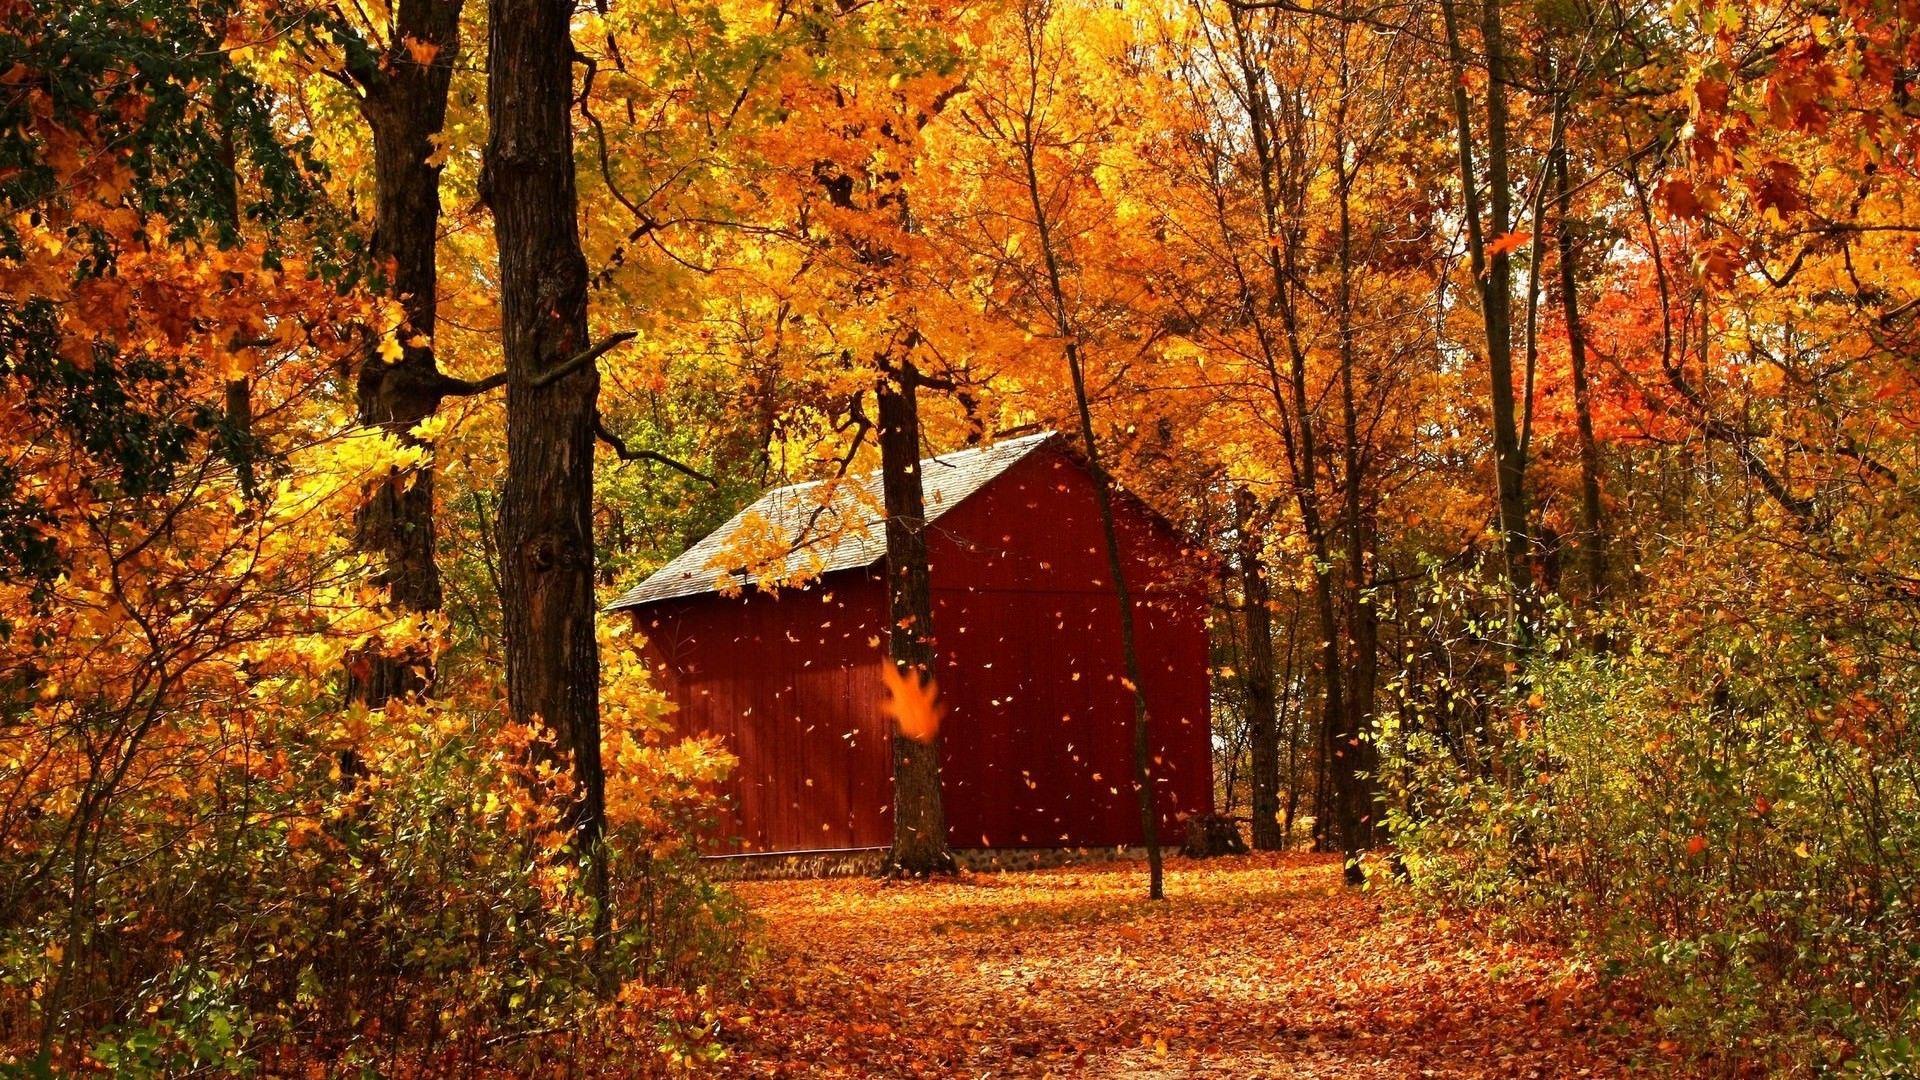 Autumn Wallpaper, Background, Image, Picture. Design